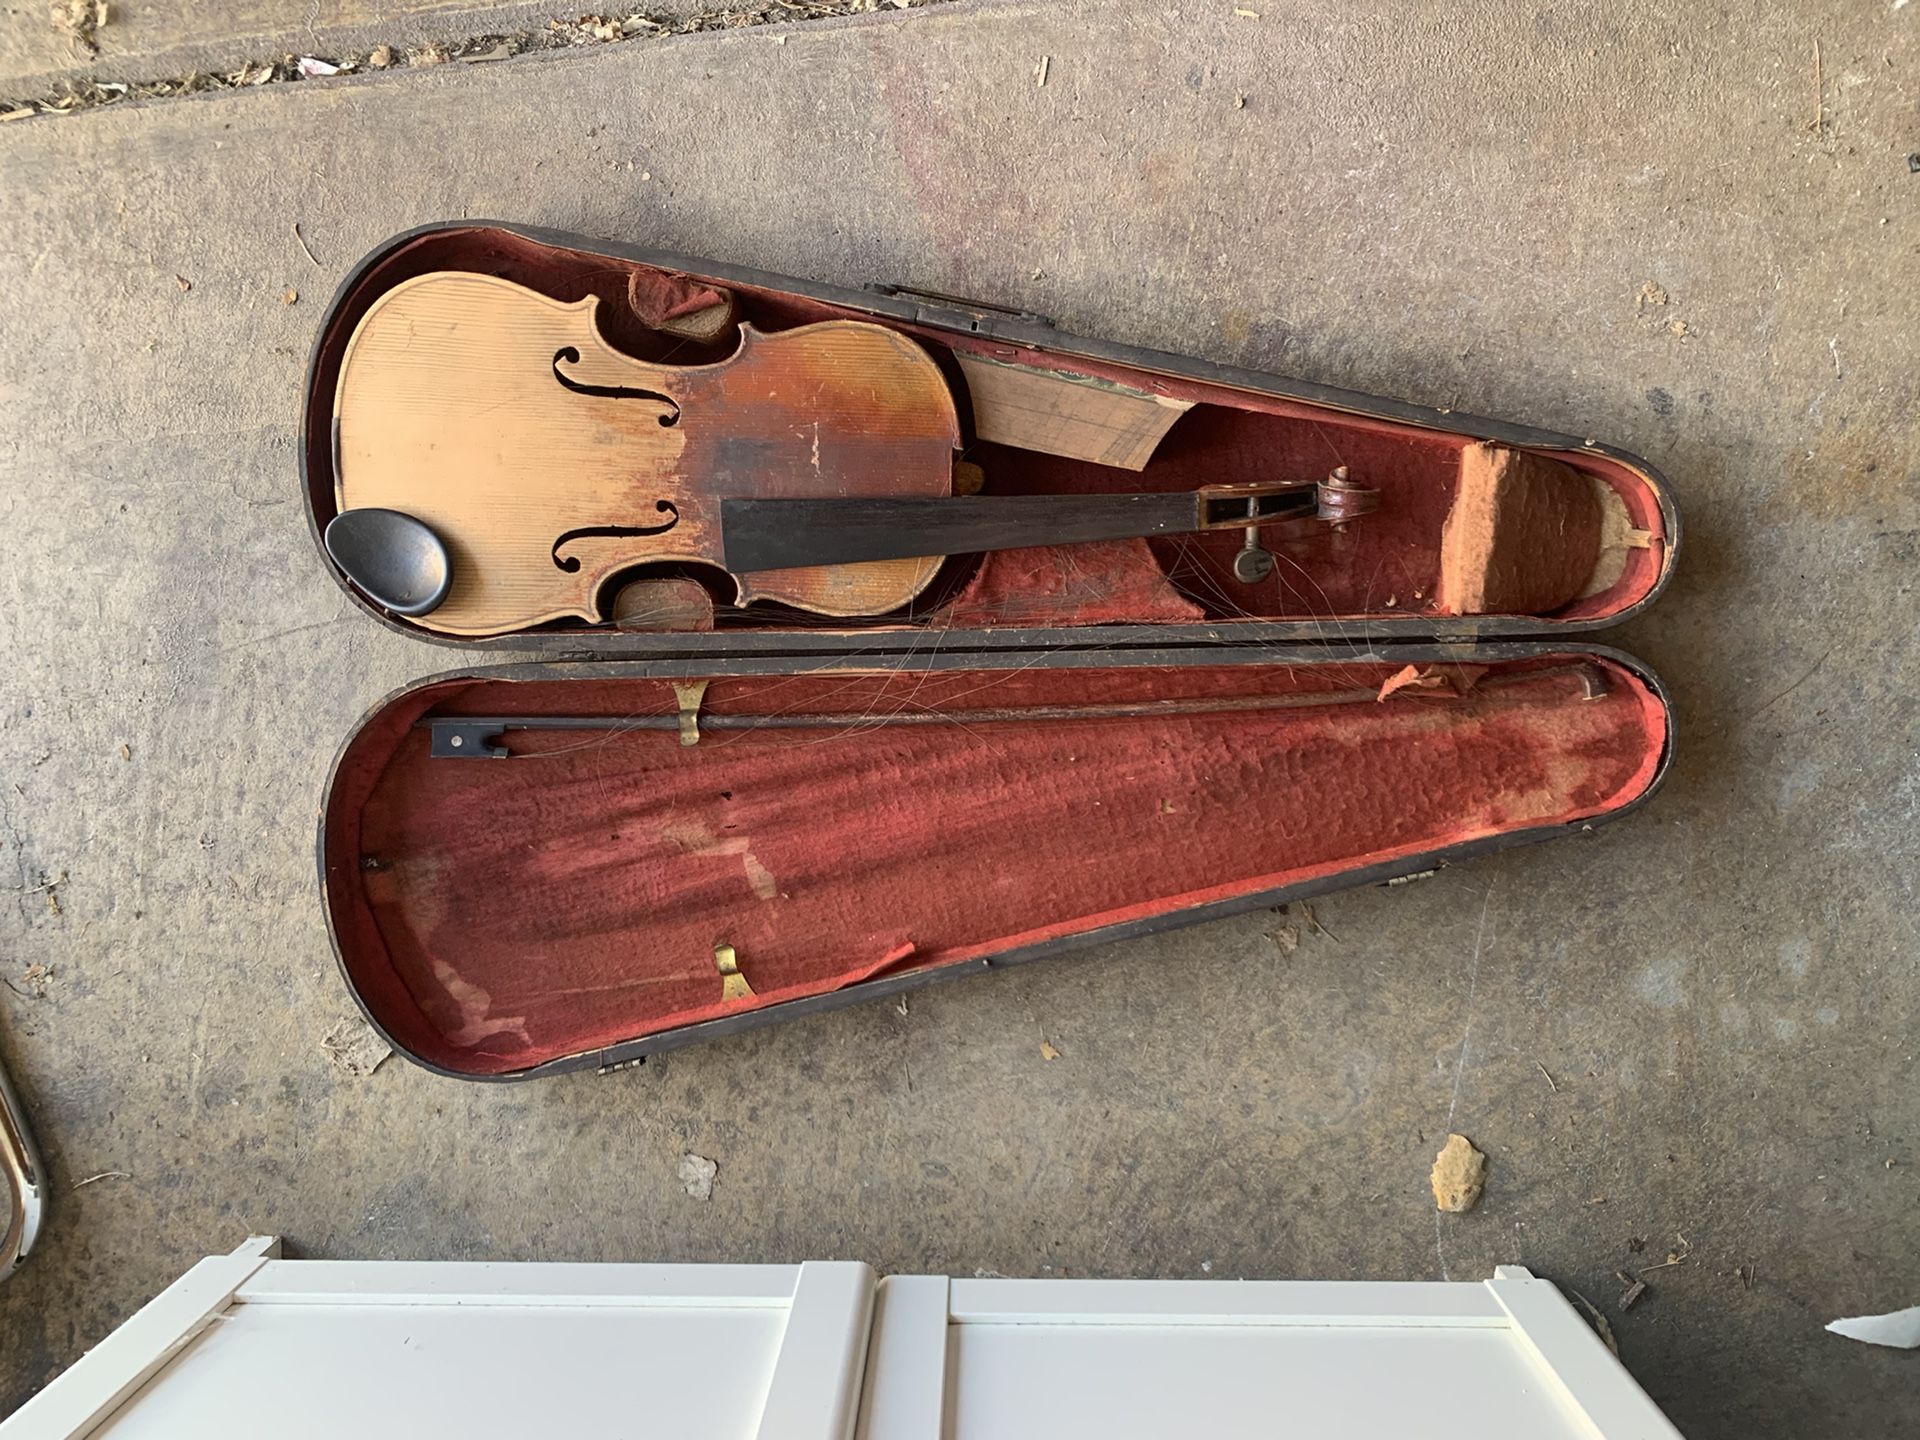 Very Old Broken Violin In Case